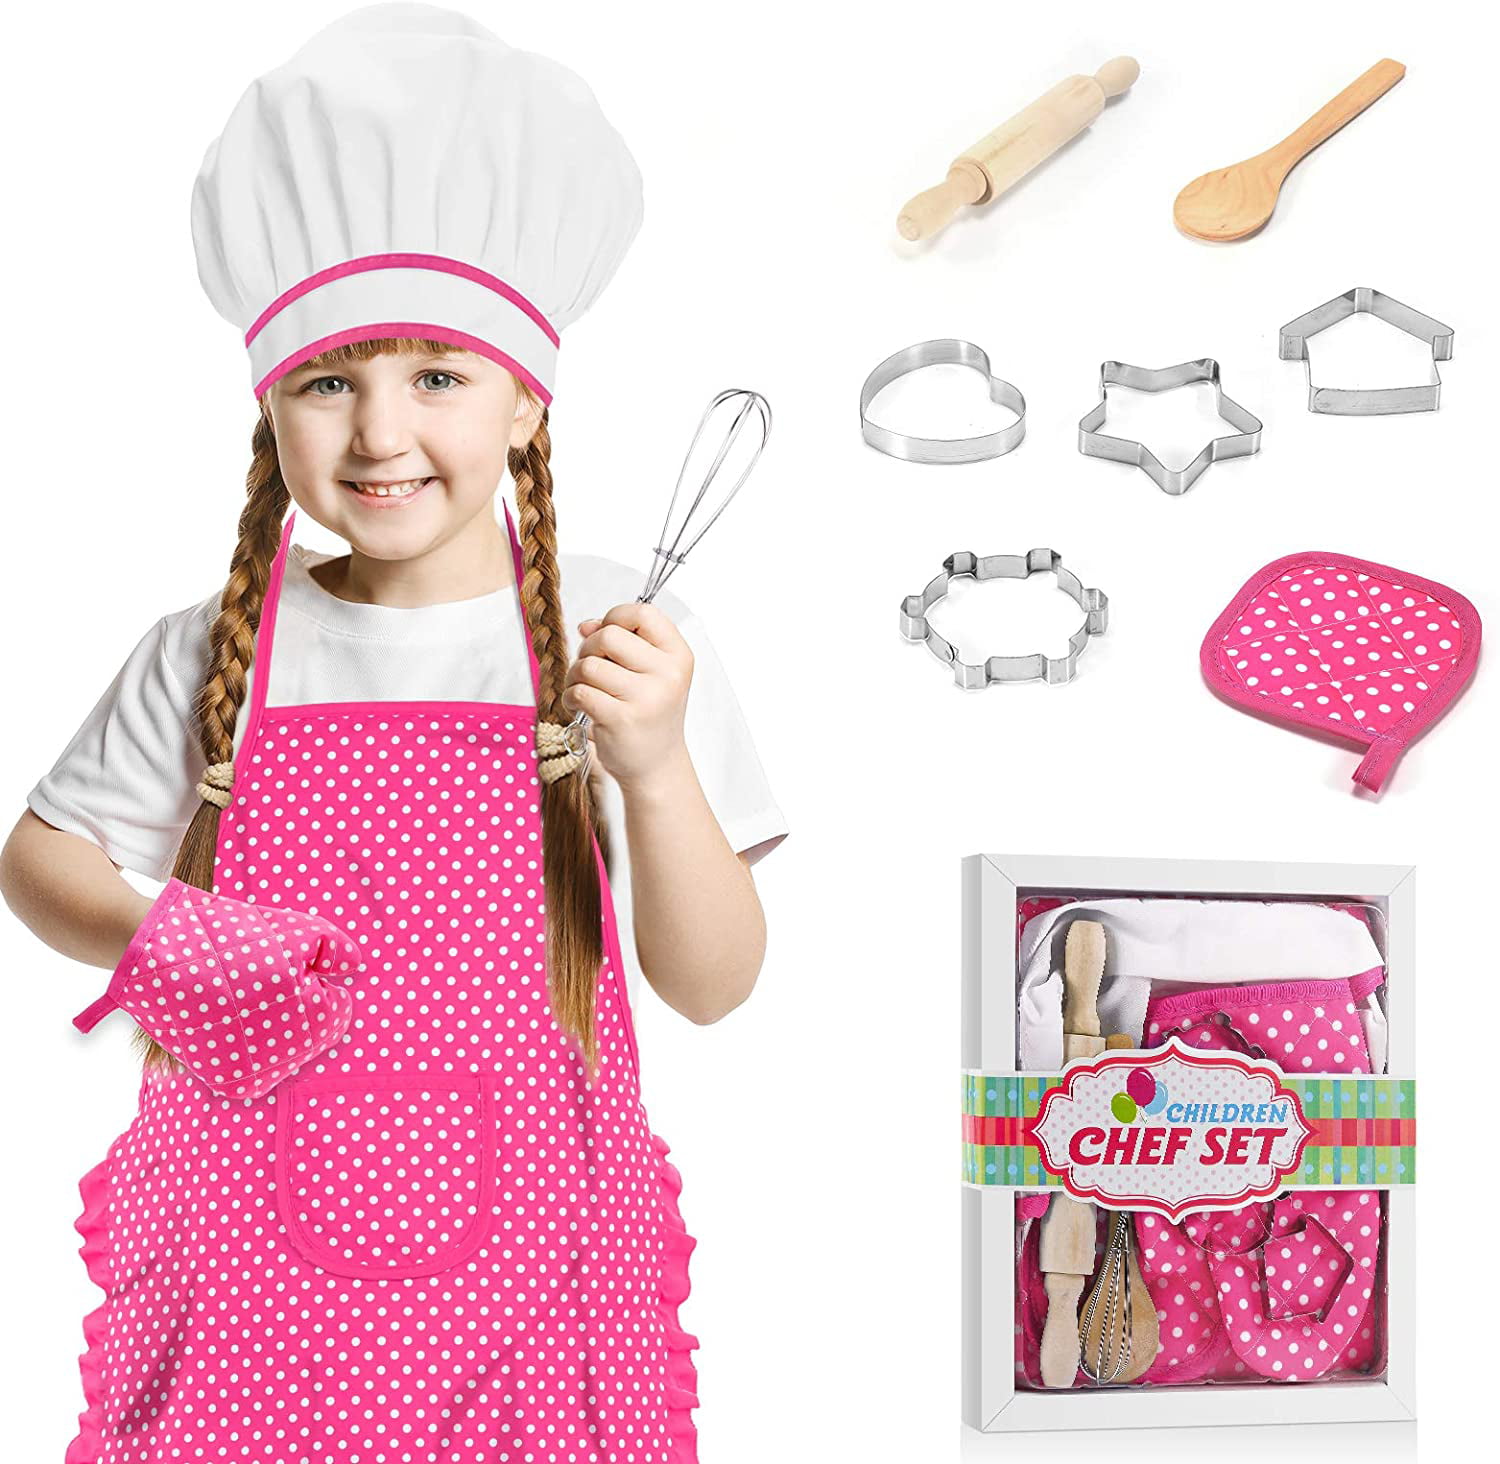 cuffslee 13pcs Complete Kids Baking Set Cute Apron Cooking Set Childrens Baking Set Cooking Apron Baking Sets For Kids